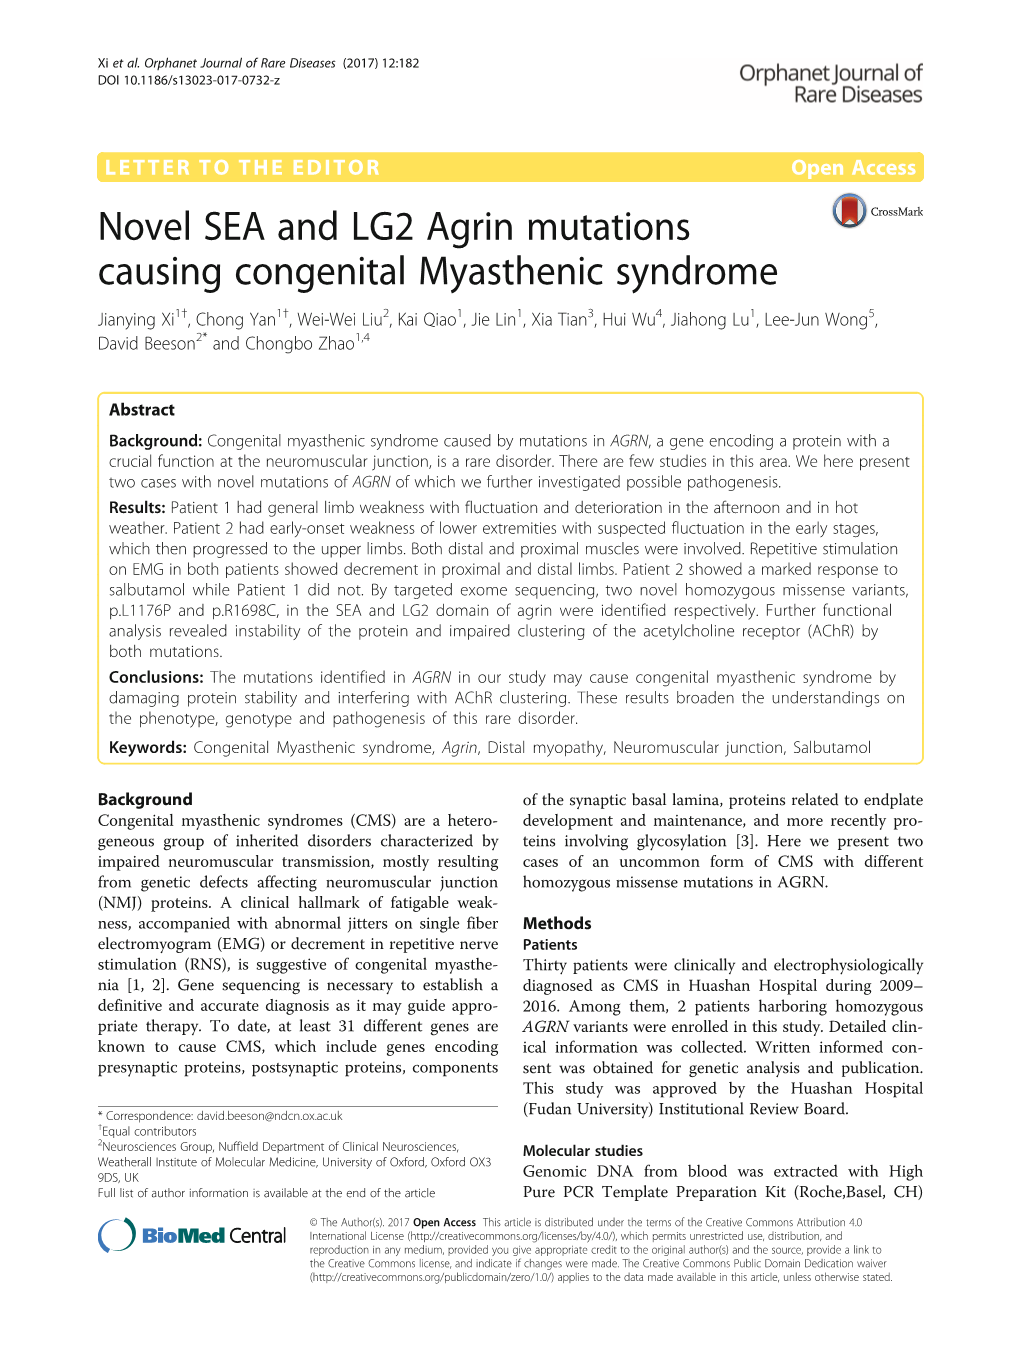 Novel SEA and LG2 Agrin Mutations Causing Congenital Myasthenic